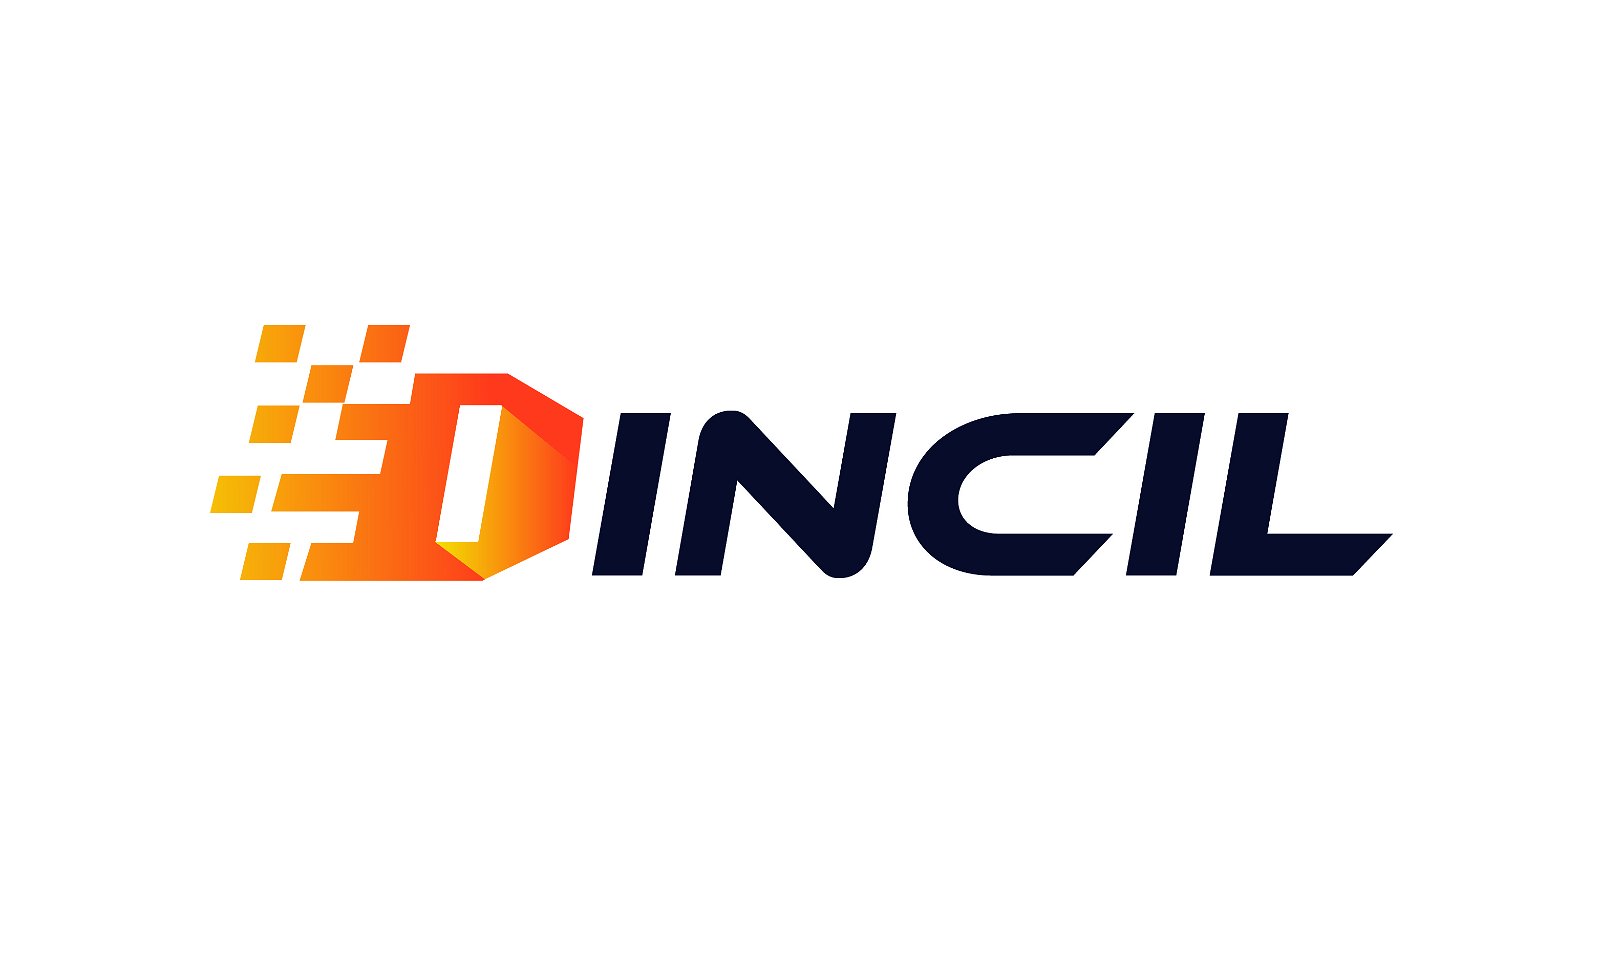 Incil.com - Creative brandable domain for sale